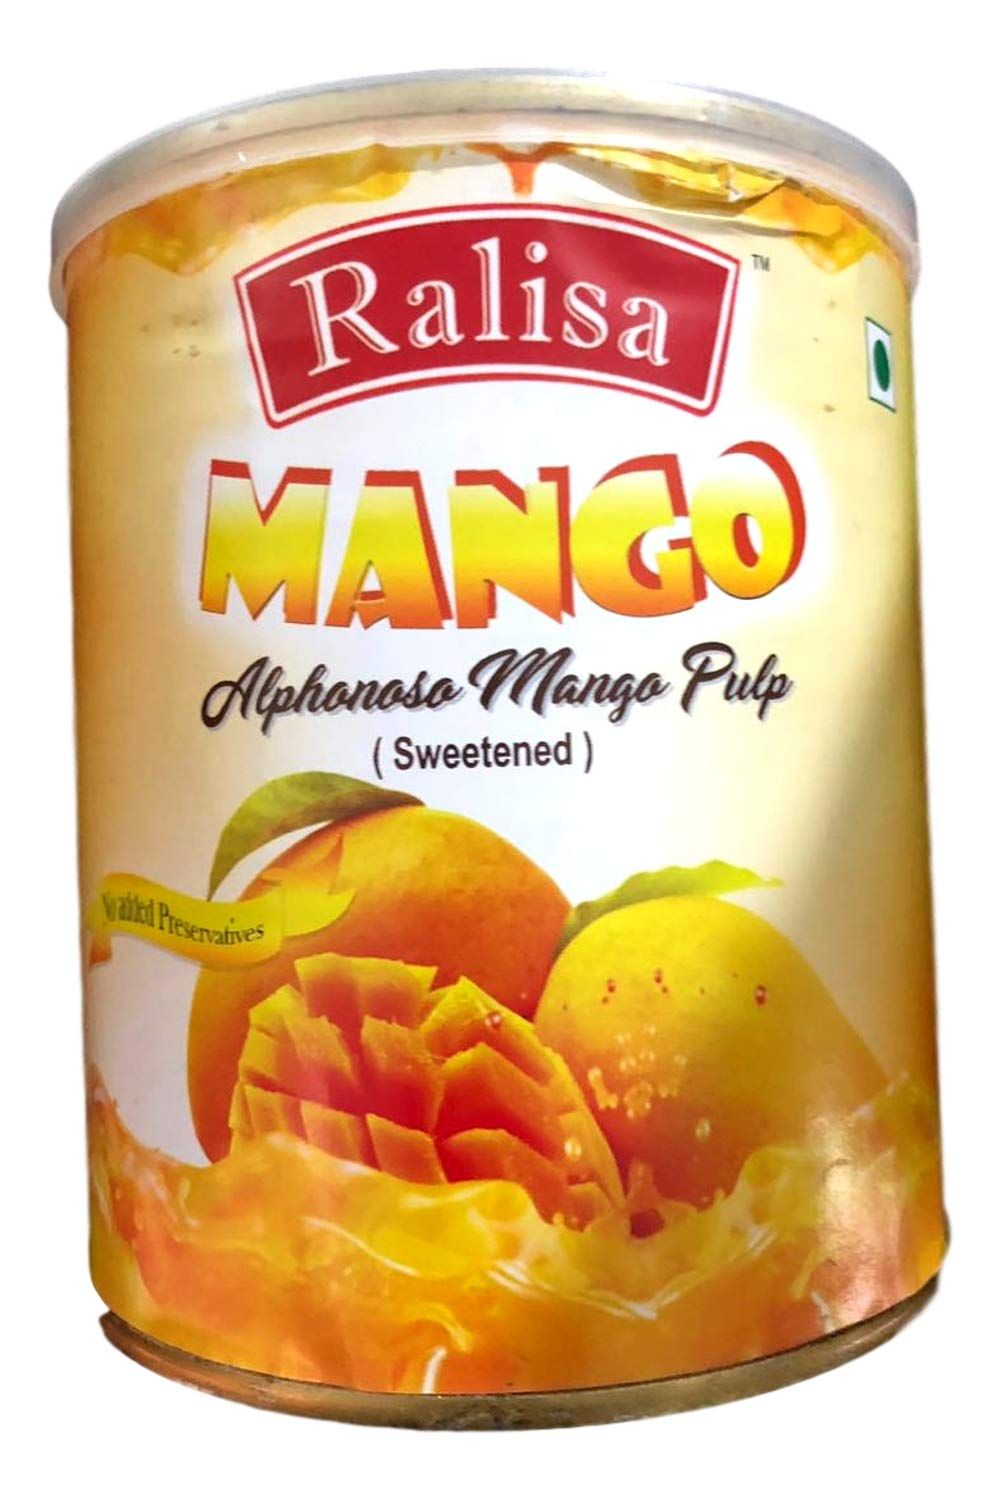 Ralisa Mango Pulp Image